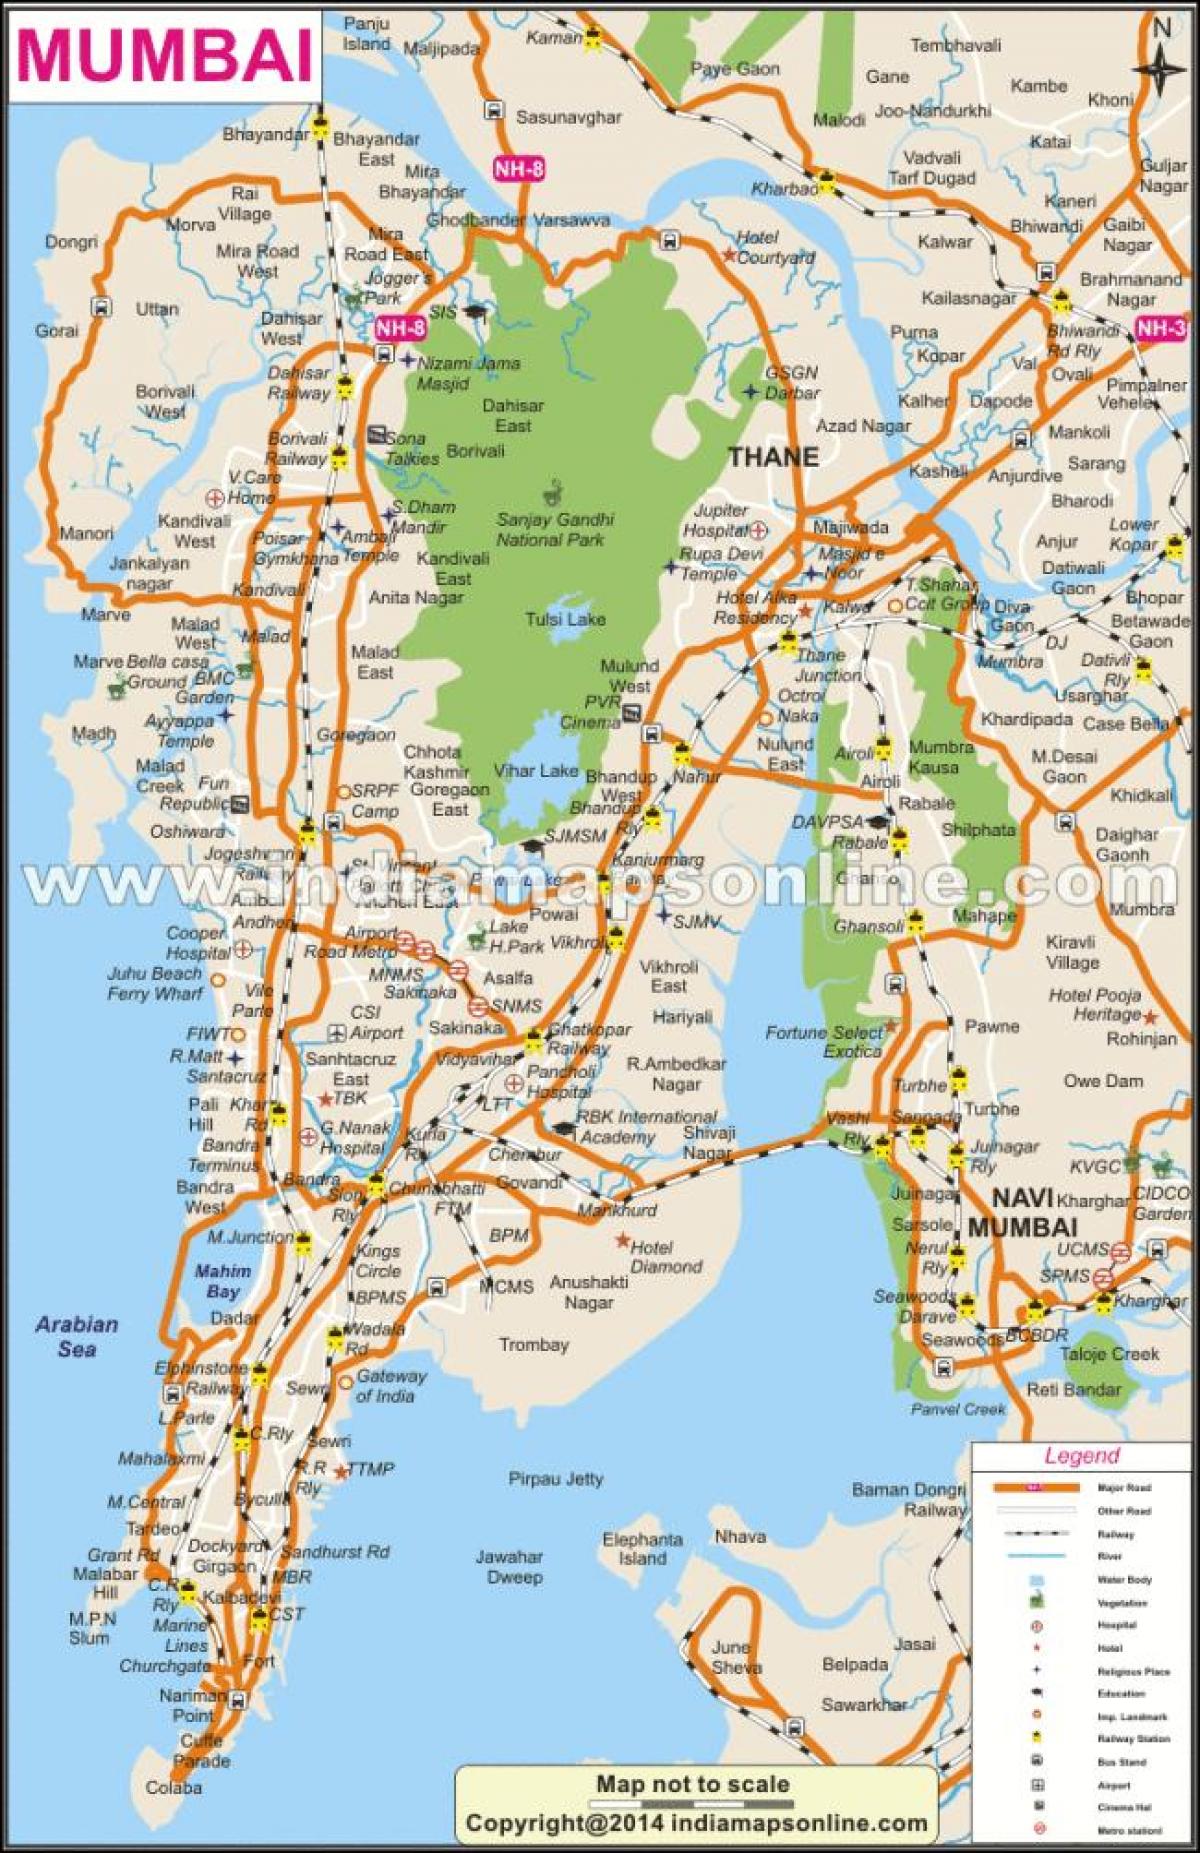 kort over lokale Mumbai